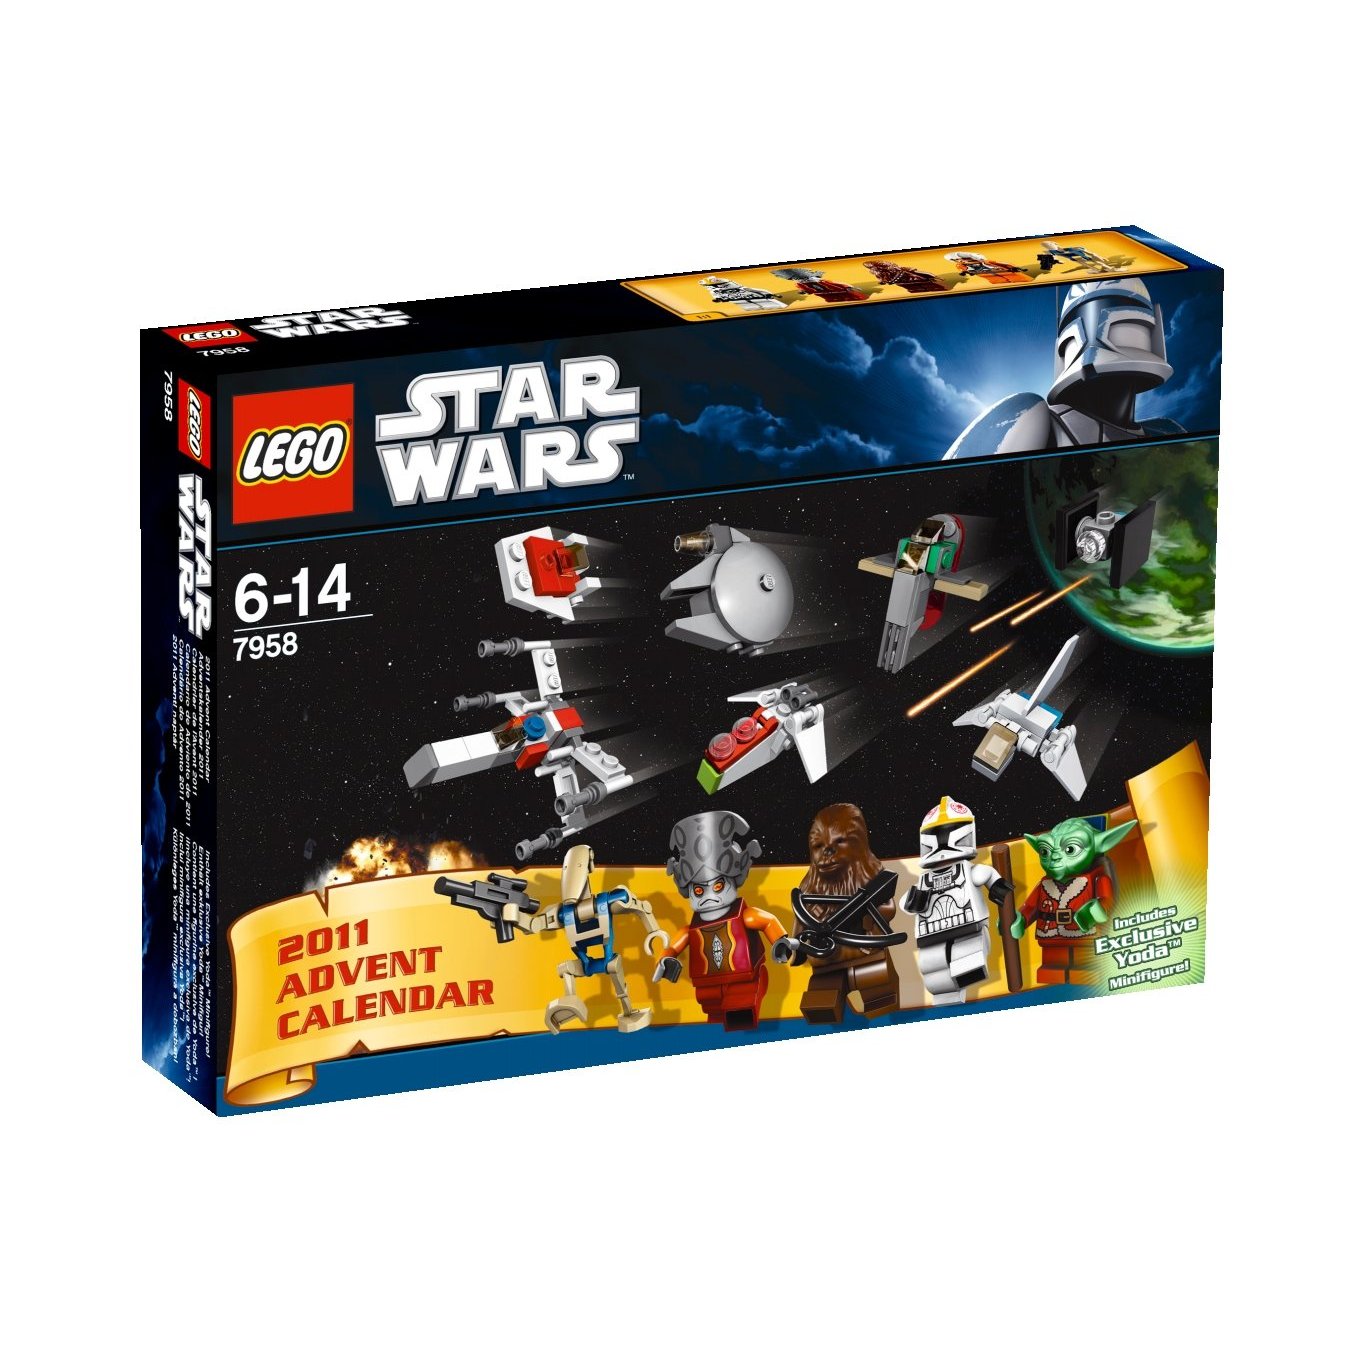 Lego Star Wars Nute Gunray Minifigure From 2011 Advent New Mini Figure Minifig 